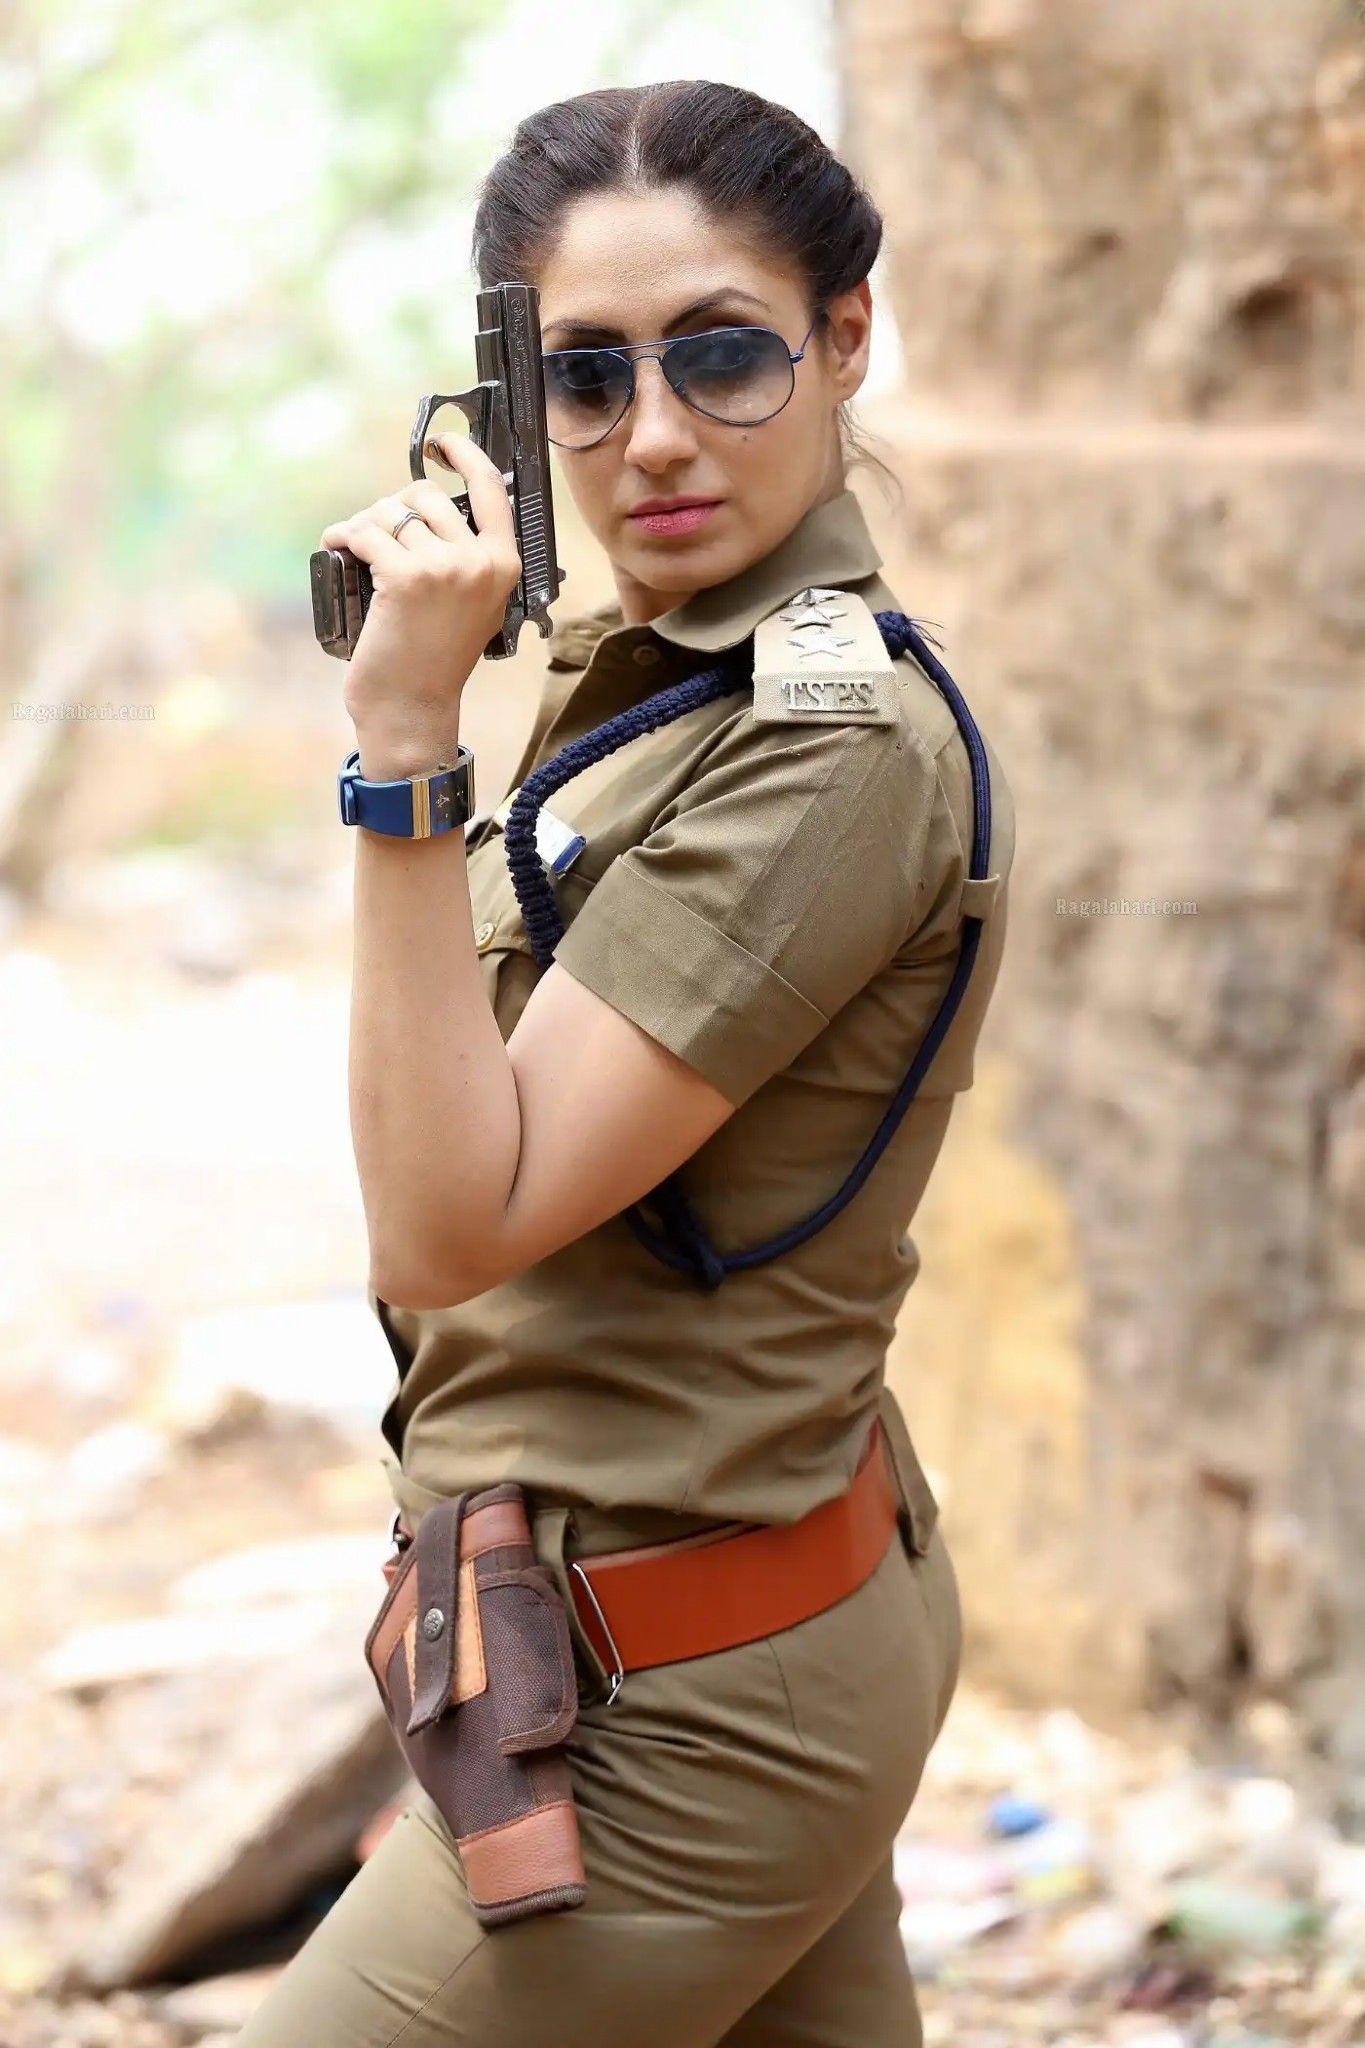 Ladies Police - Officer Wearing Sunglasses